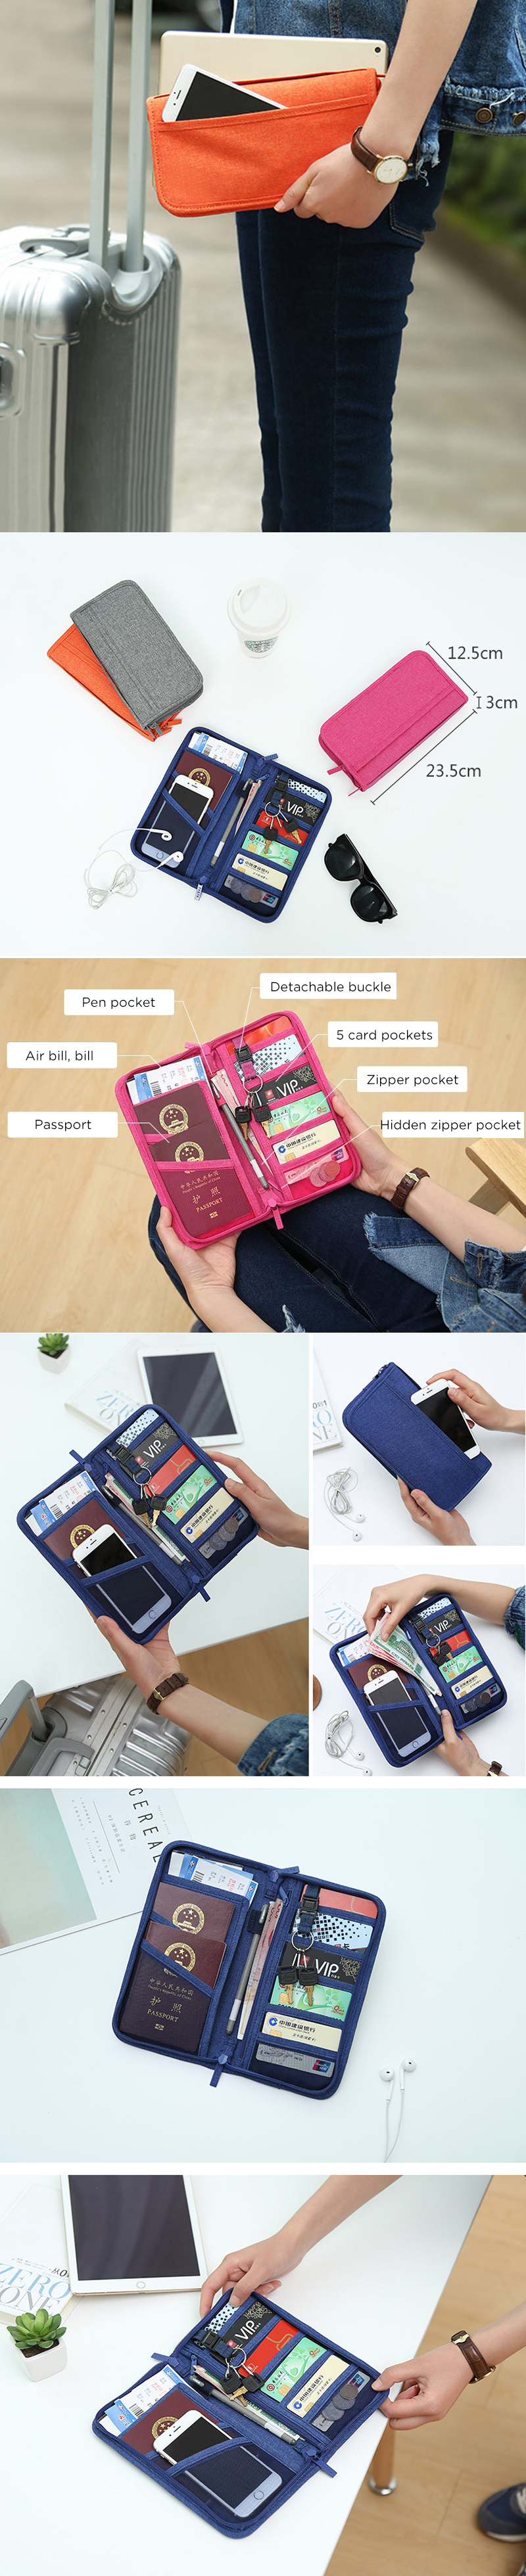 IPReereg-Passport-ID-Credit-Card-Holder-Package-Bill-Note-Organizer-Wallet-Storage-Bag-1562217-1